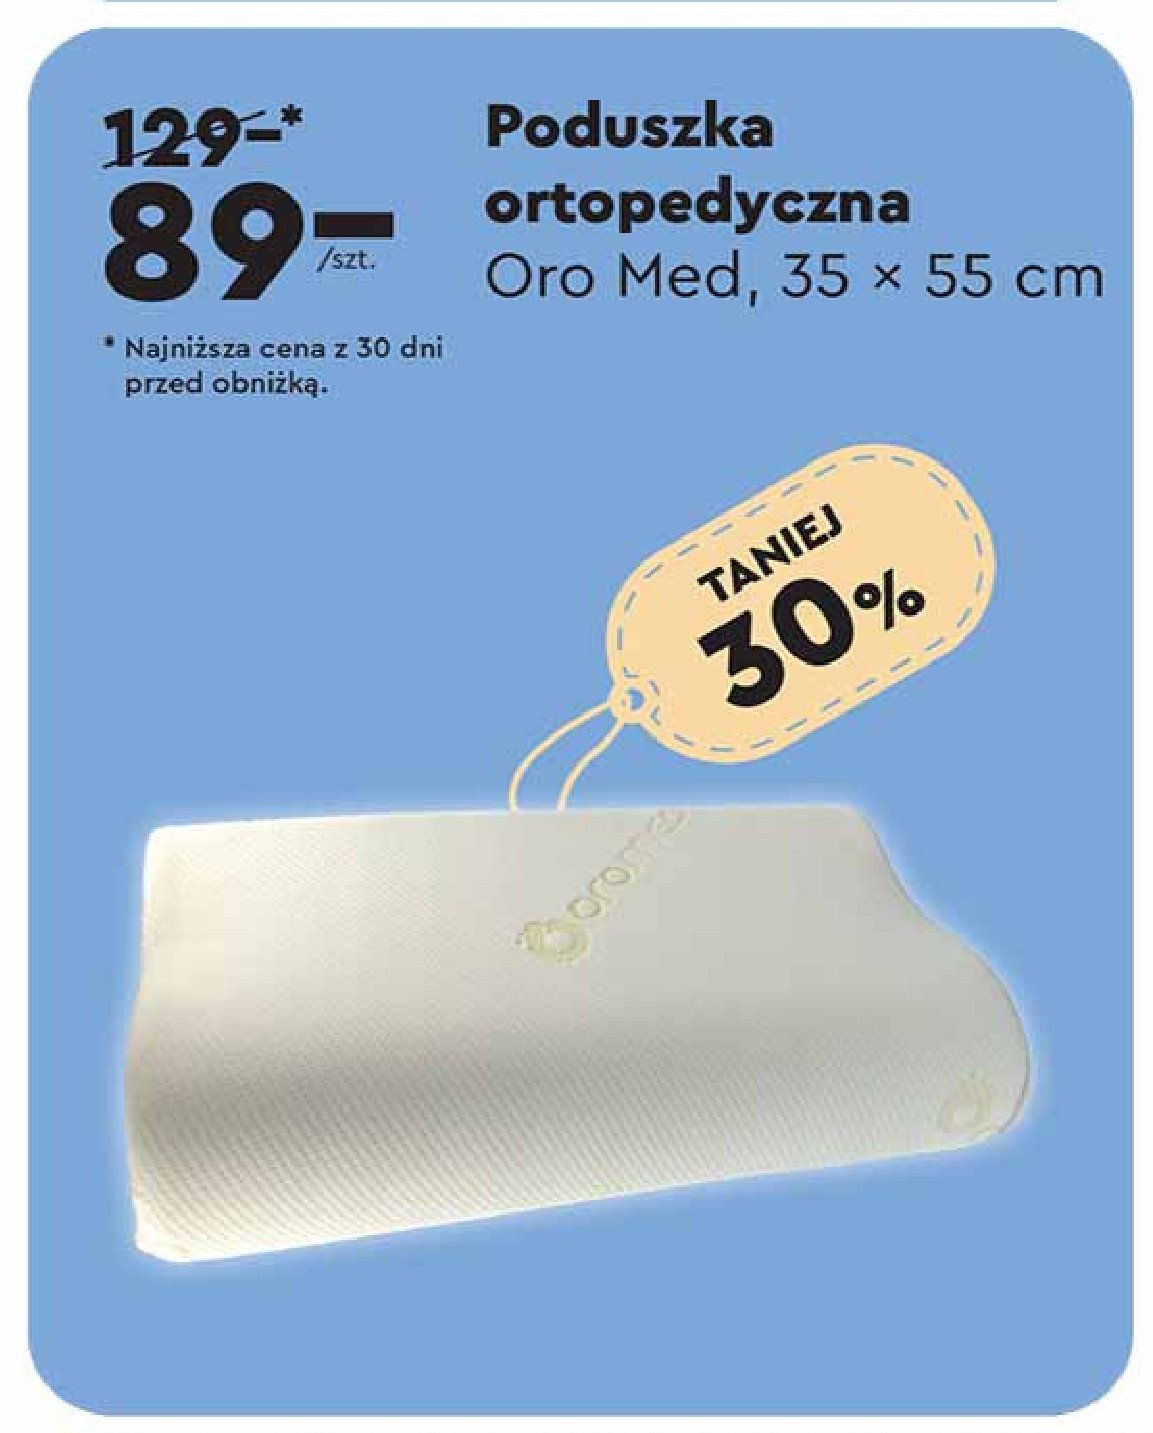 Poduszka ortopedyczna 35 x 55 cm Oro-med promocja